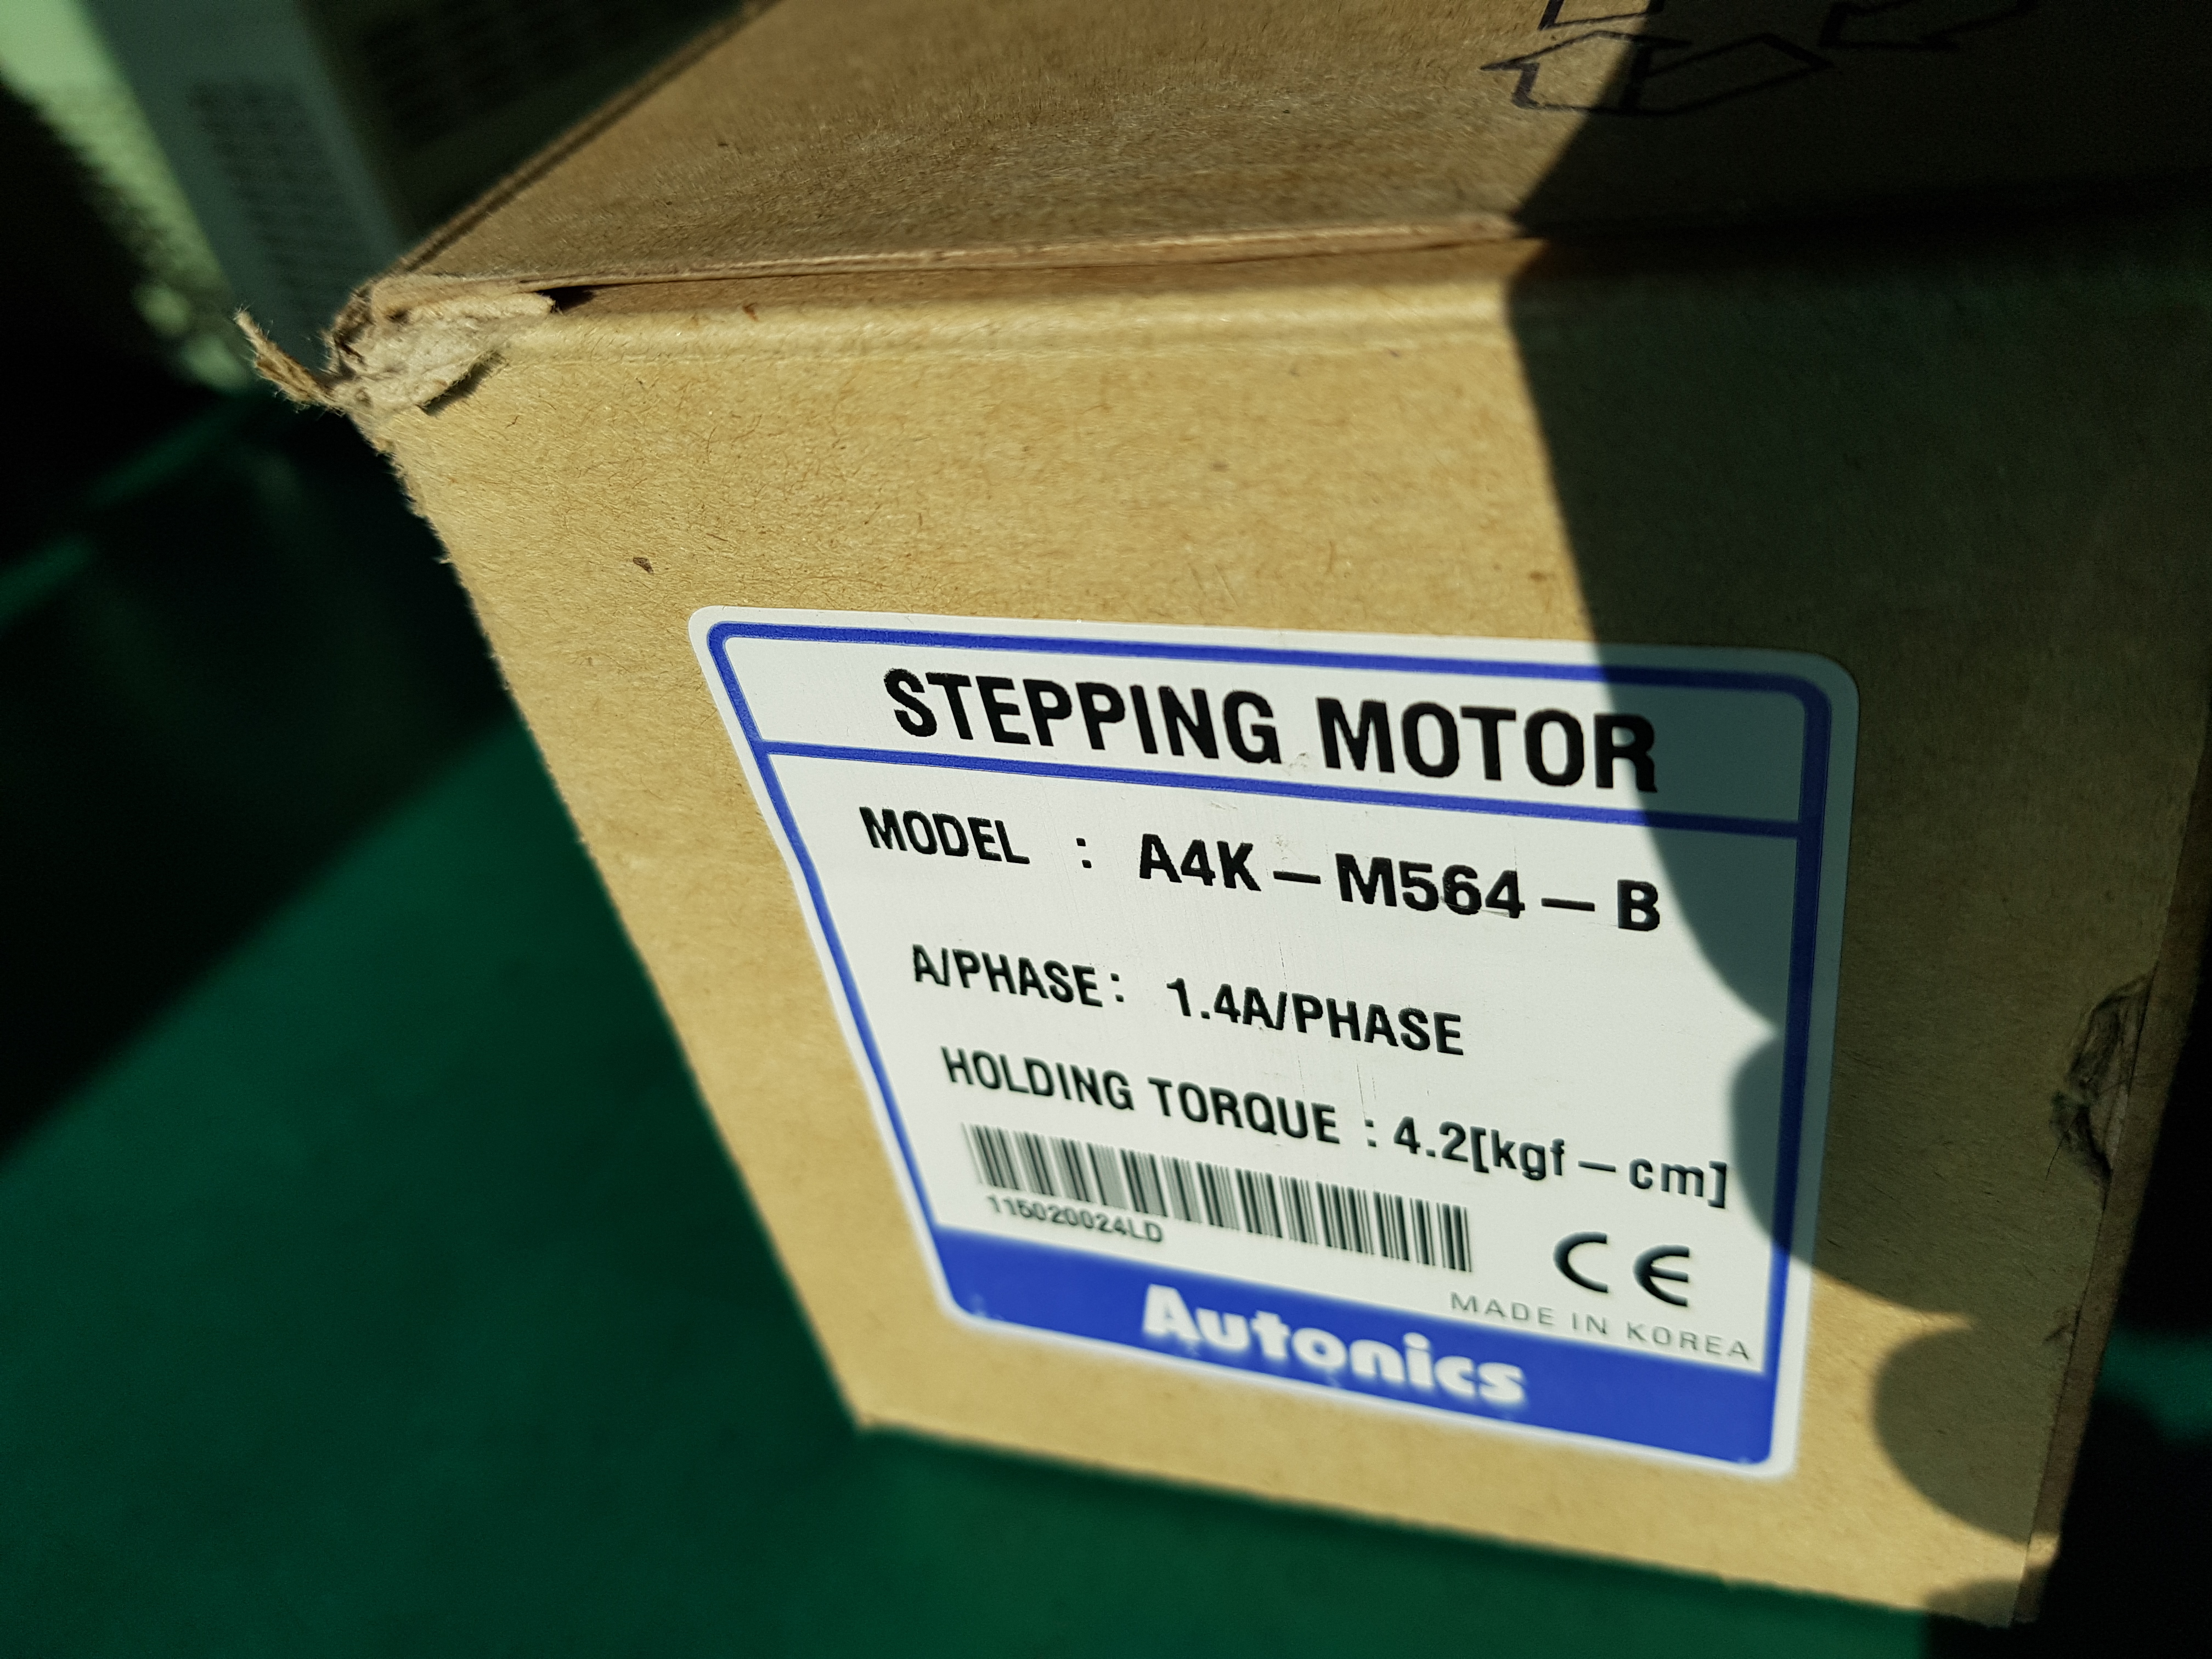 STEPPING MOTOR A4K-M564-B(미사용품 A급)